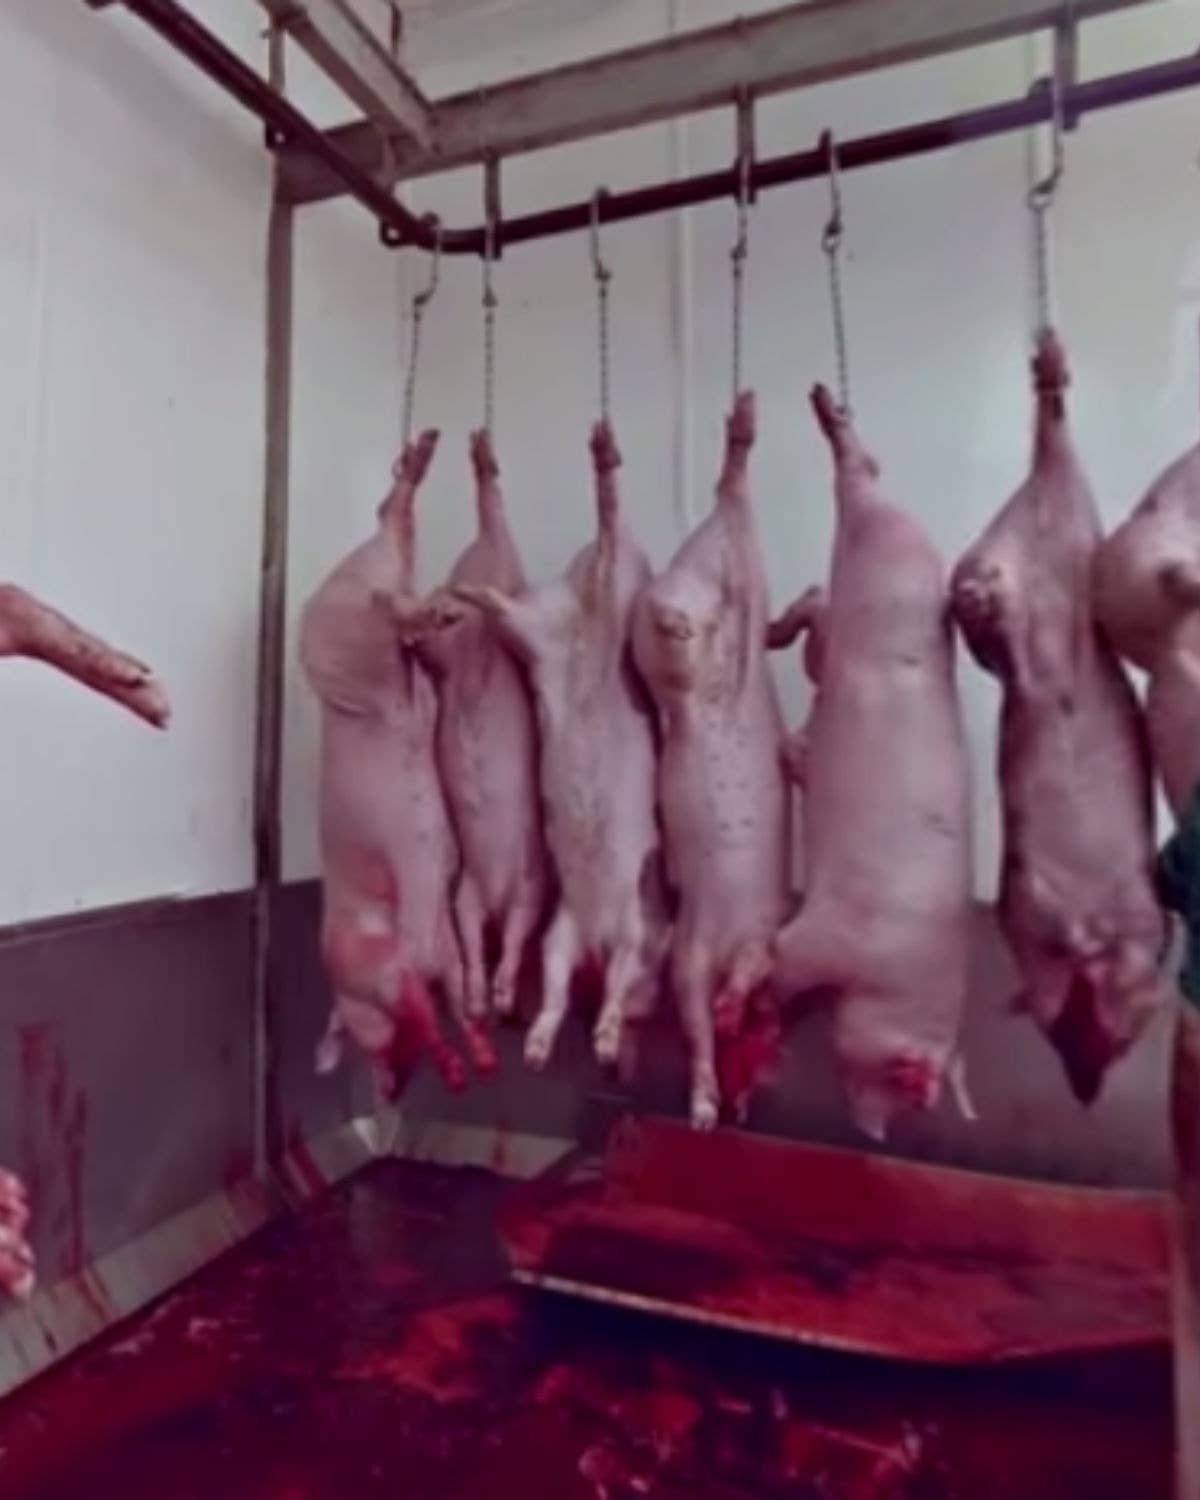 Follow Animal Welfare Groups Into the Slaughterhouse With Virtual Reality